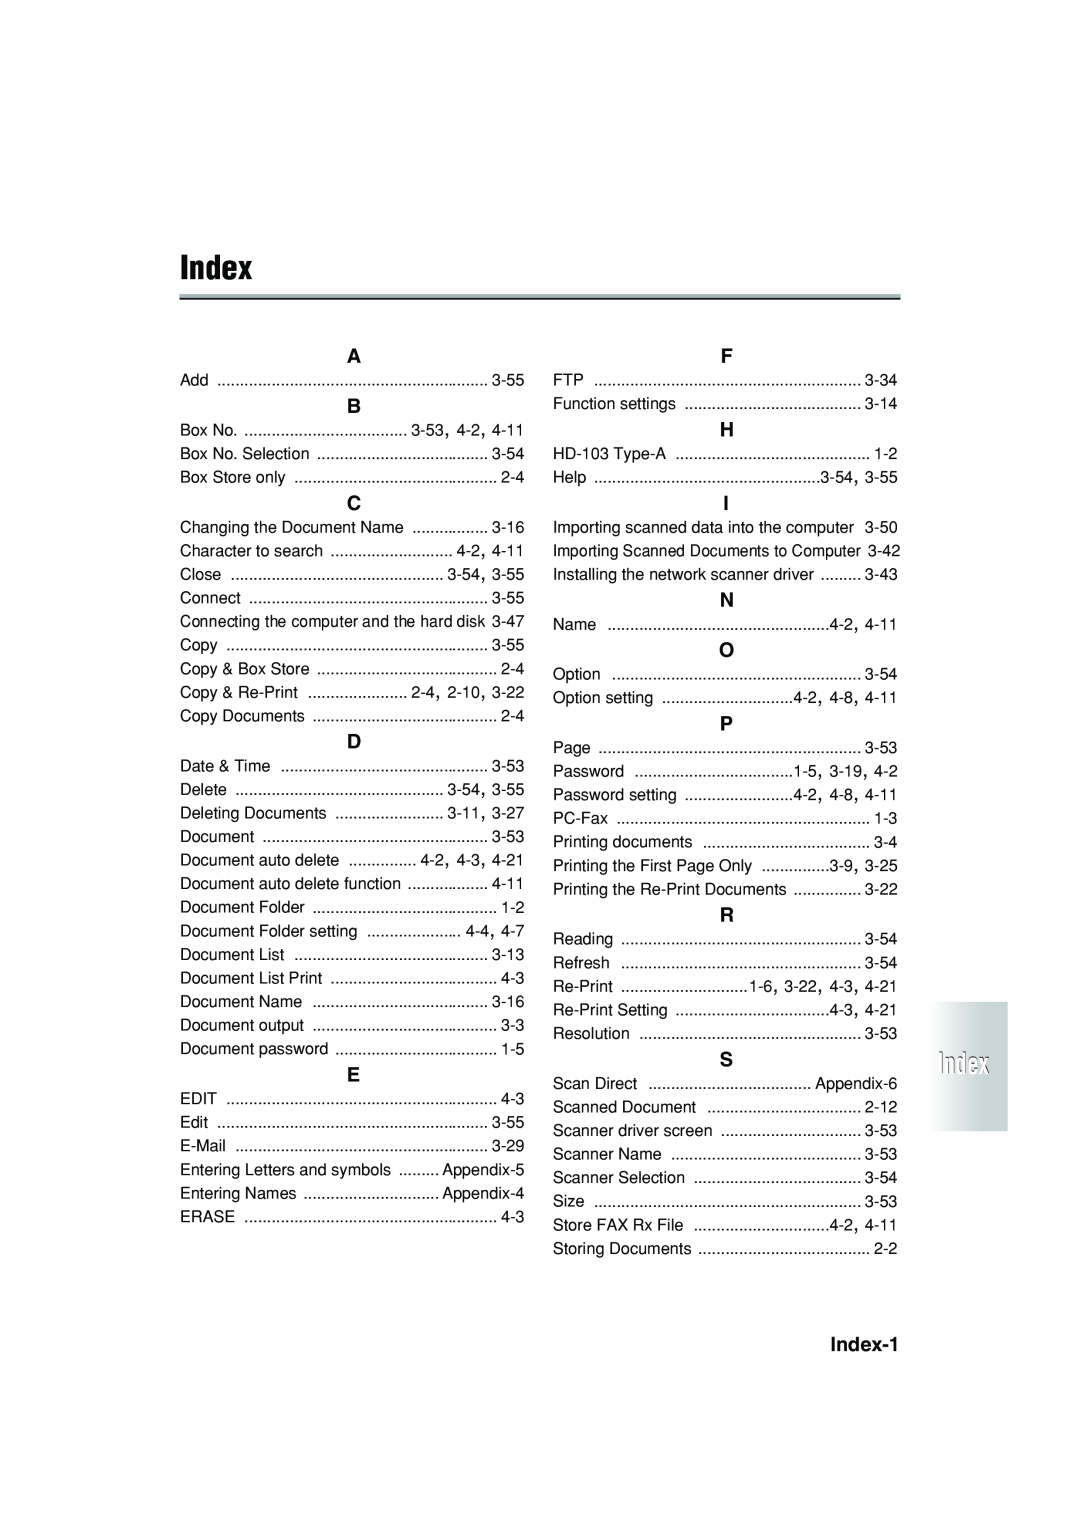 Konica Minolta 7222 manual Index 